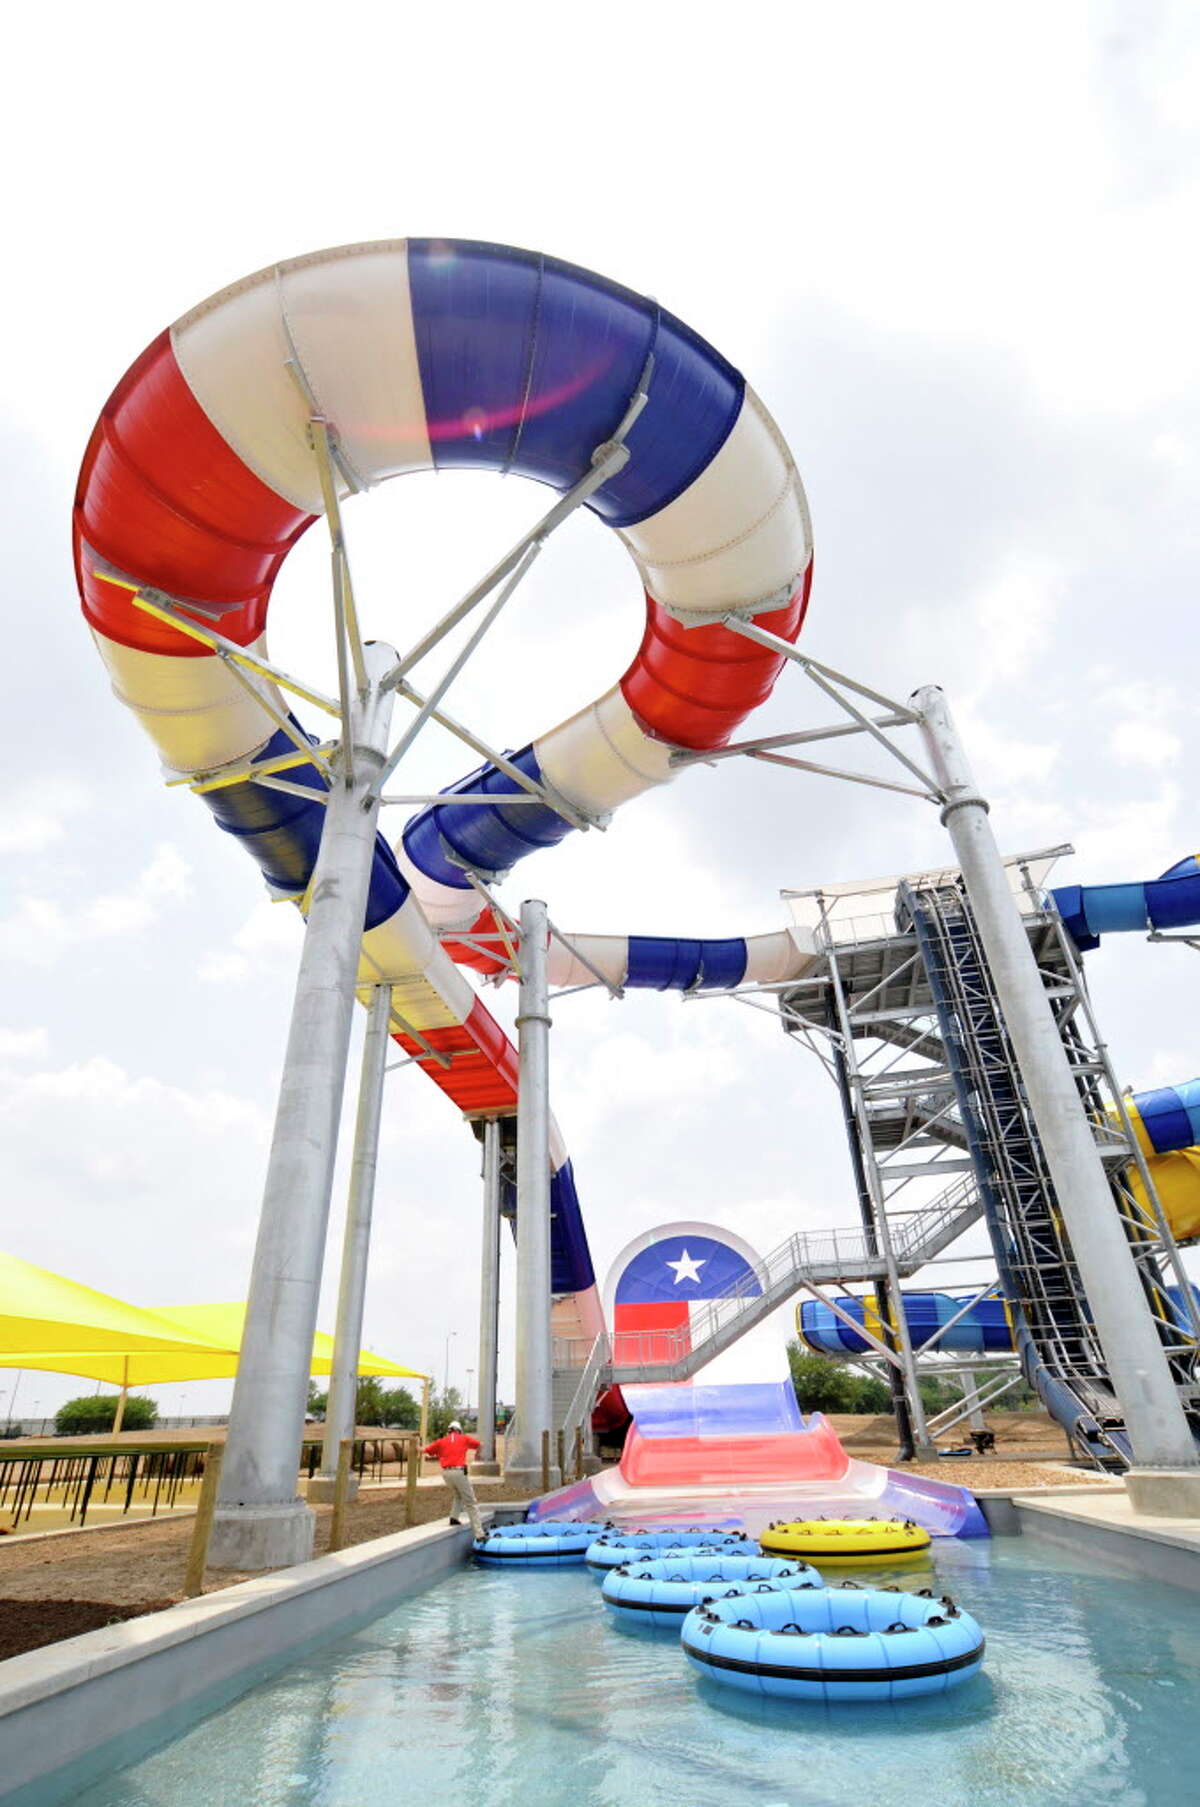 Katy's Typhoon Texas waterpark opens Memorial Day weekend